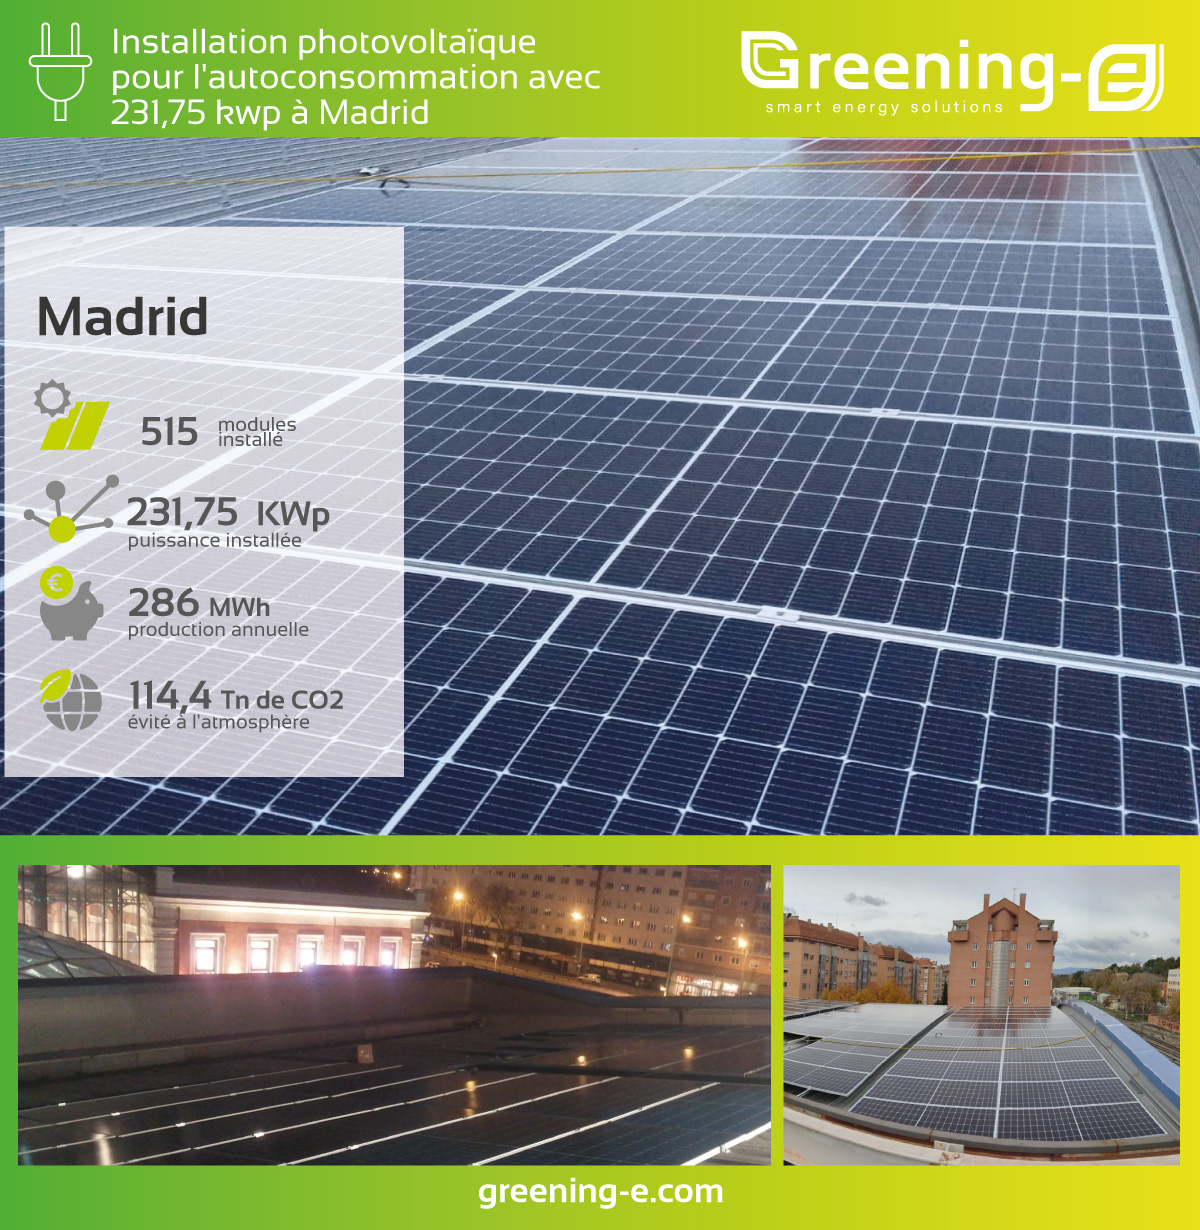 Installations Greening-e : Installation photovoltaïque d'autoconsommation de 231,75 kW à Madrid